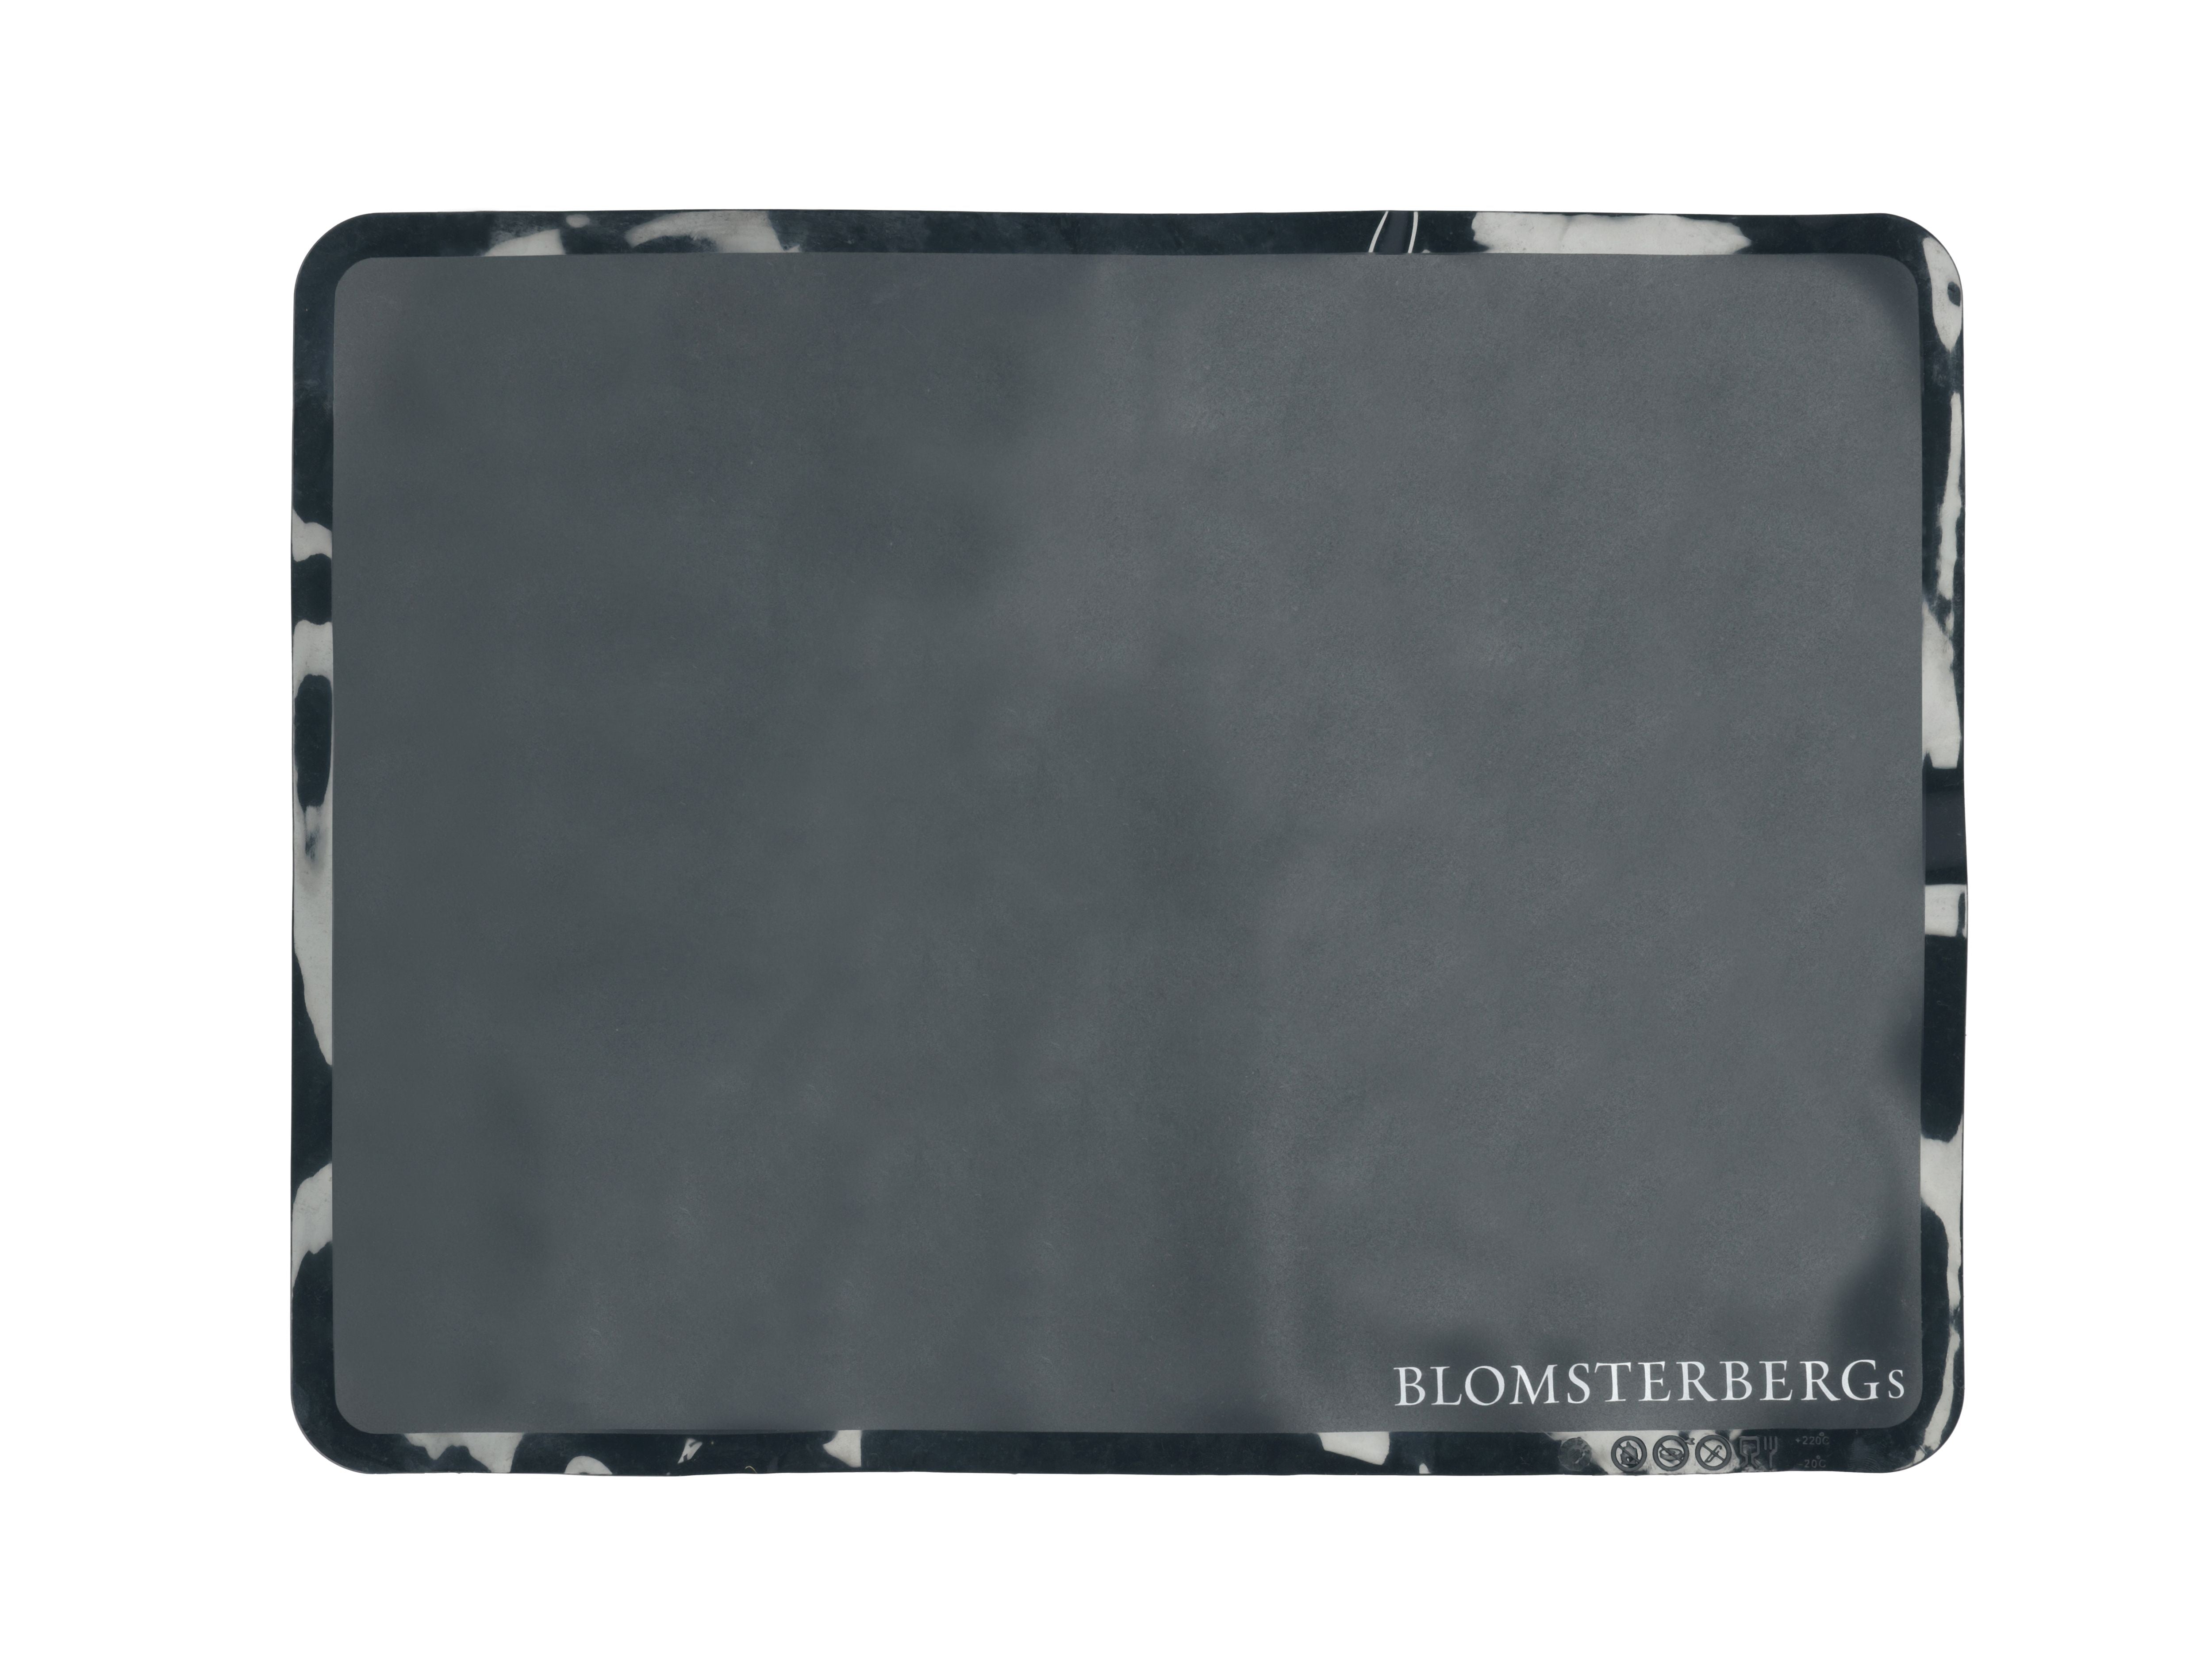 Blomsterbergs Backmat 30x40, Grau